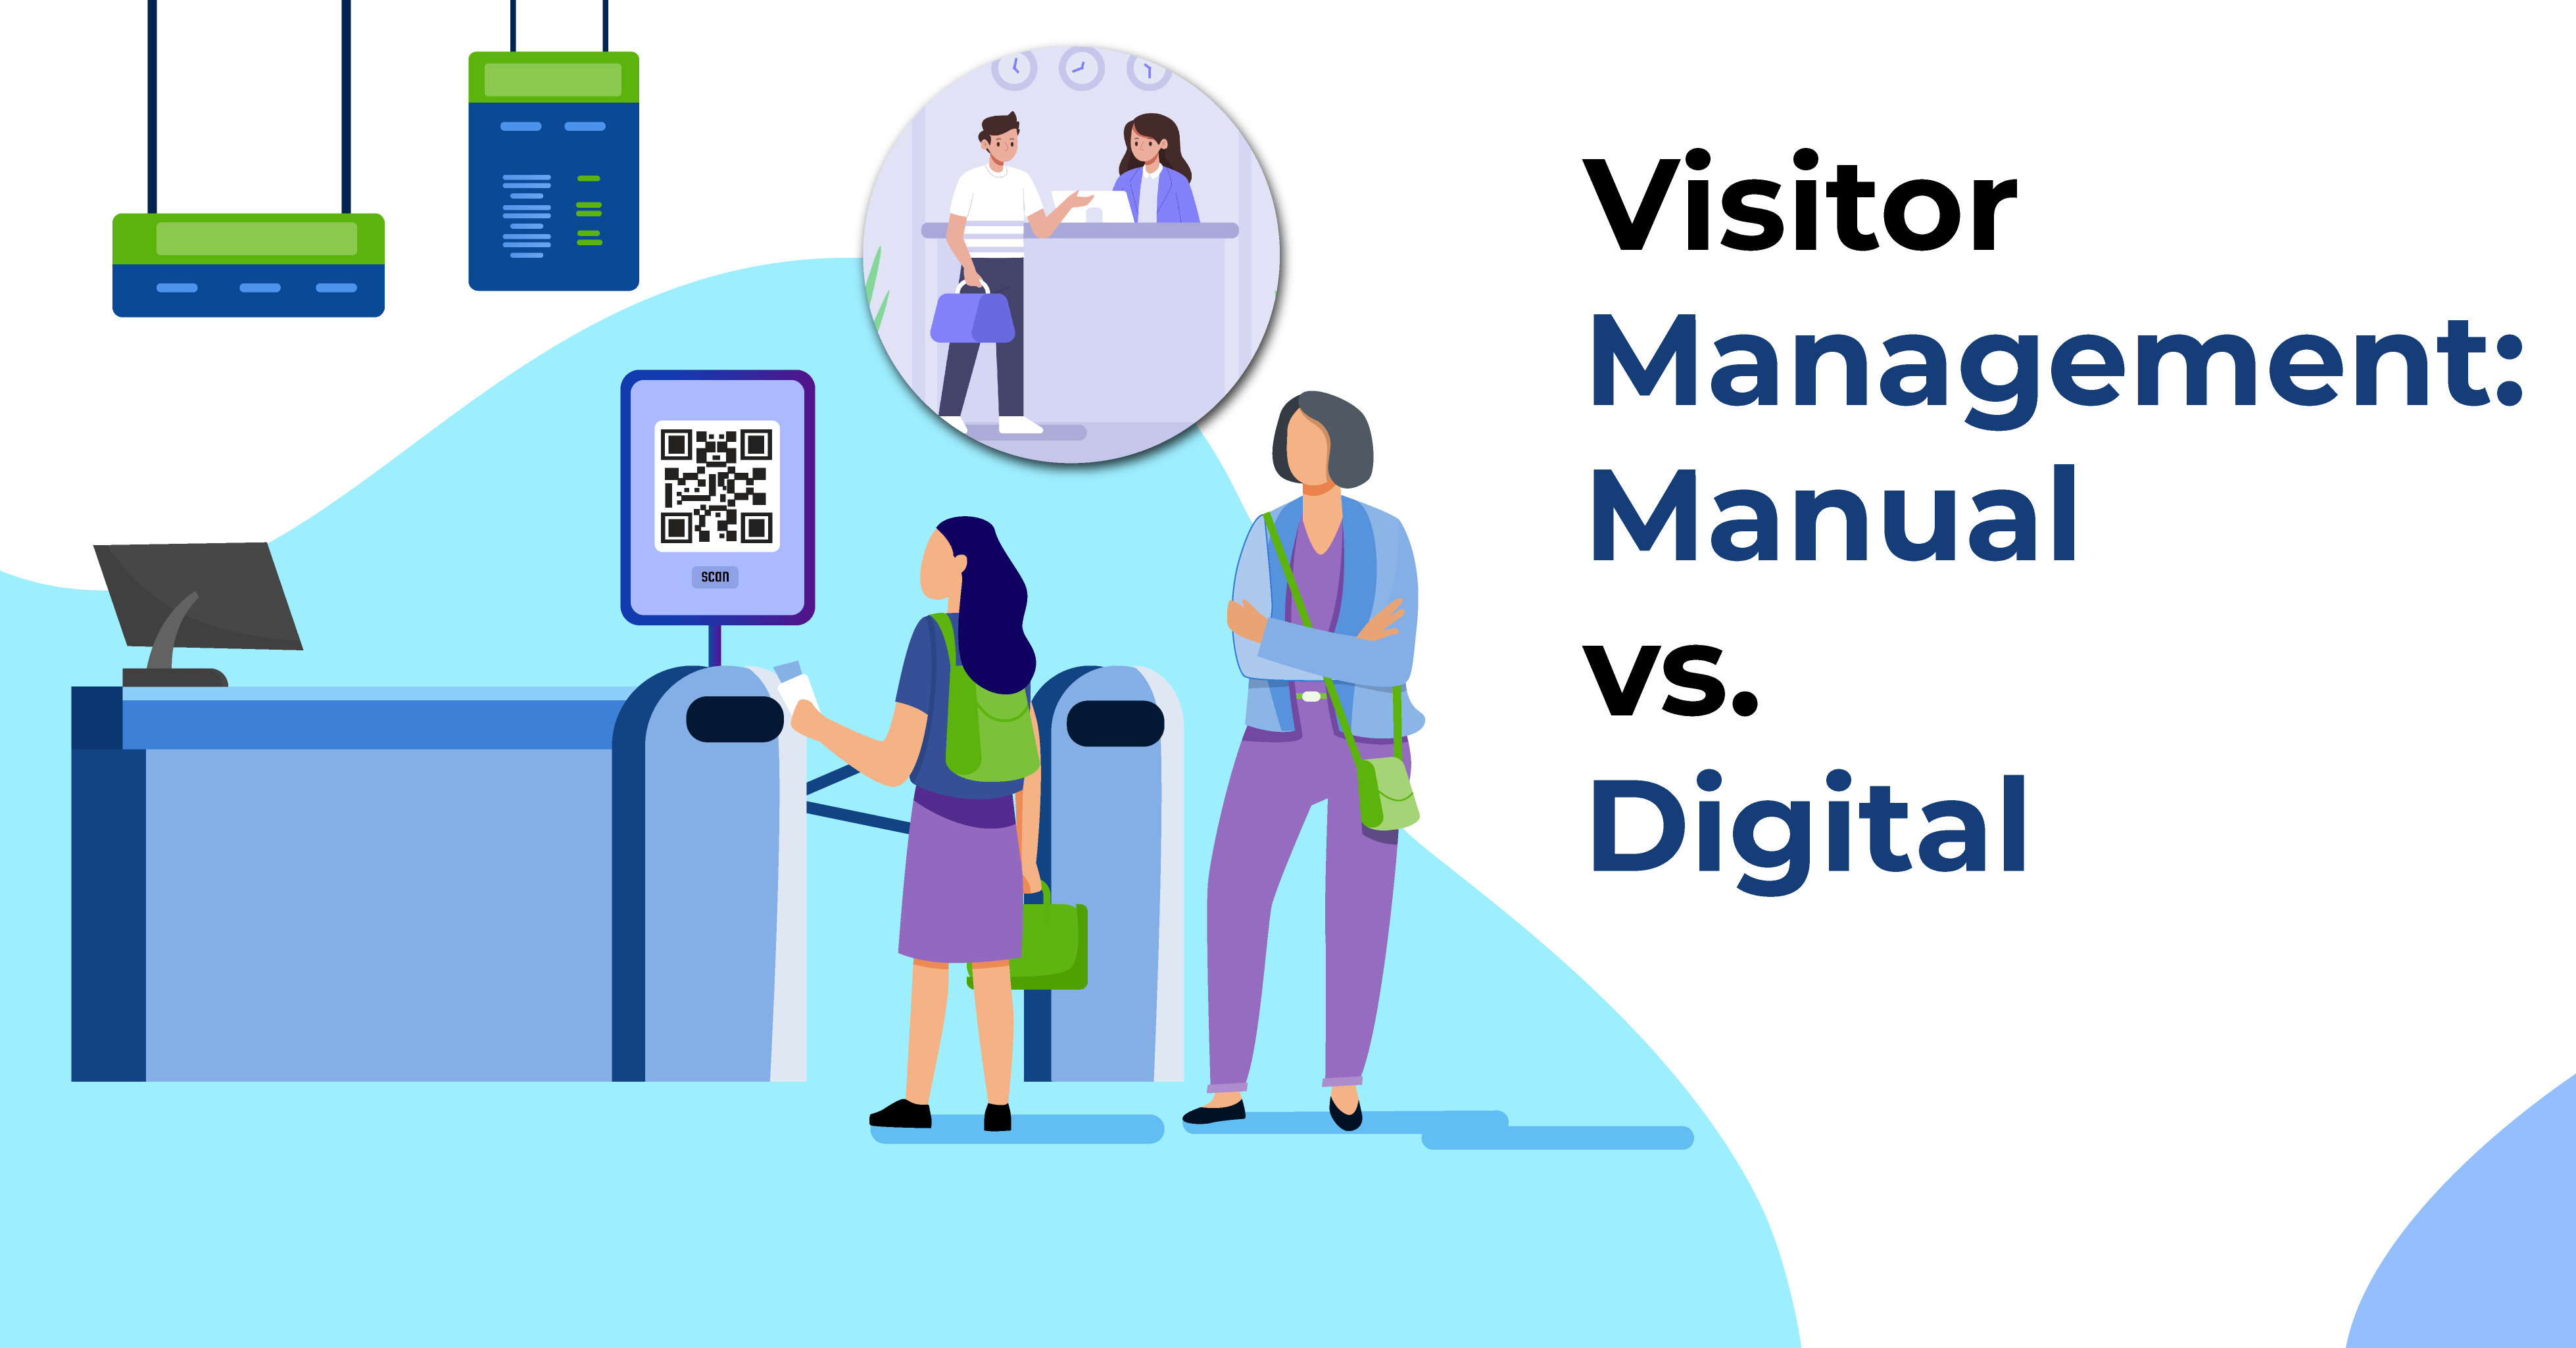 Visitor Management: Manual vs. Digital